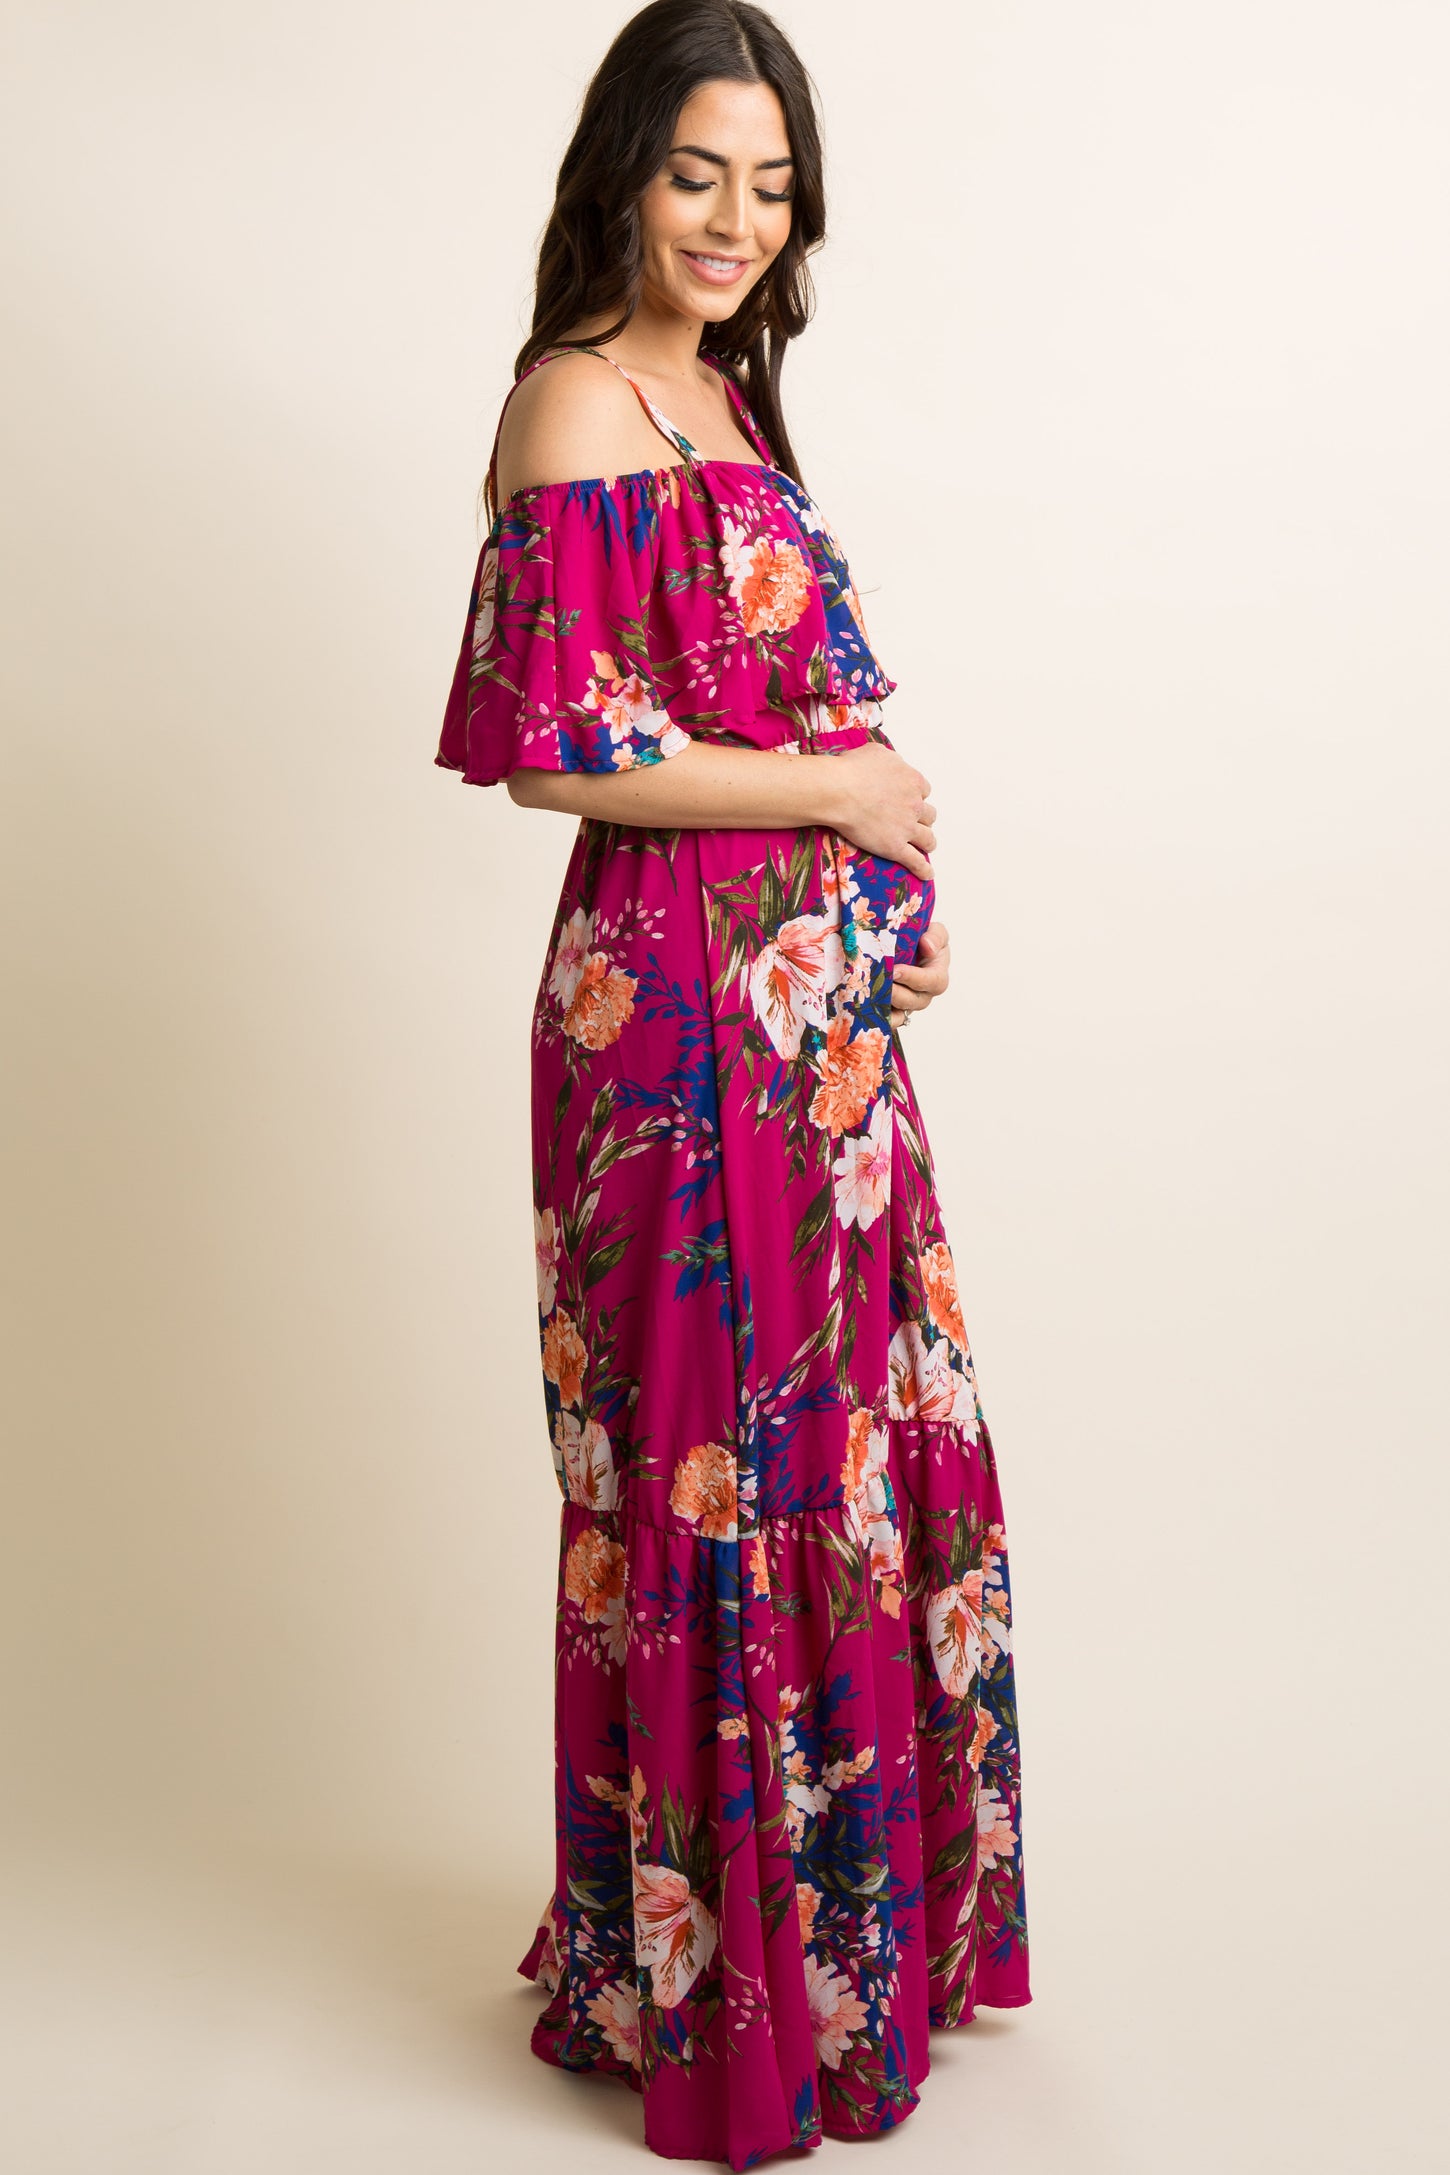 PinkBlush Magenta Floral Ruffle Open Shoulder Maternity Maxi Dress